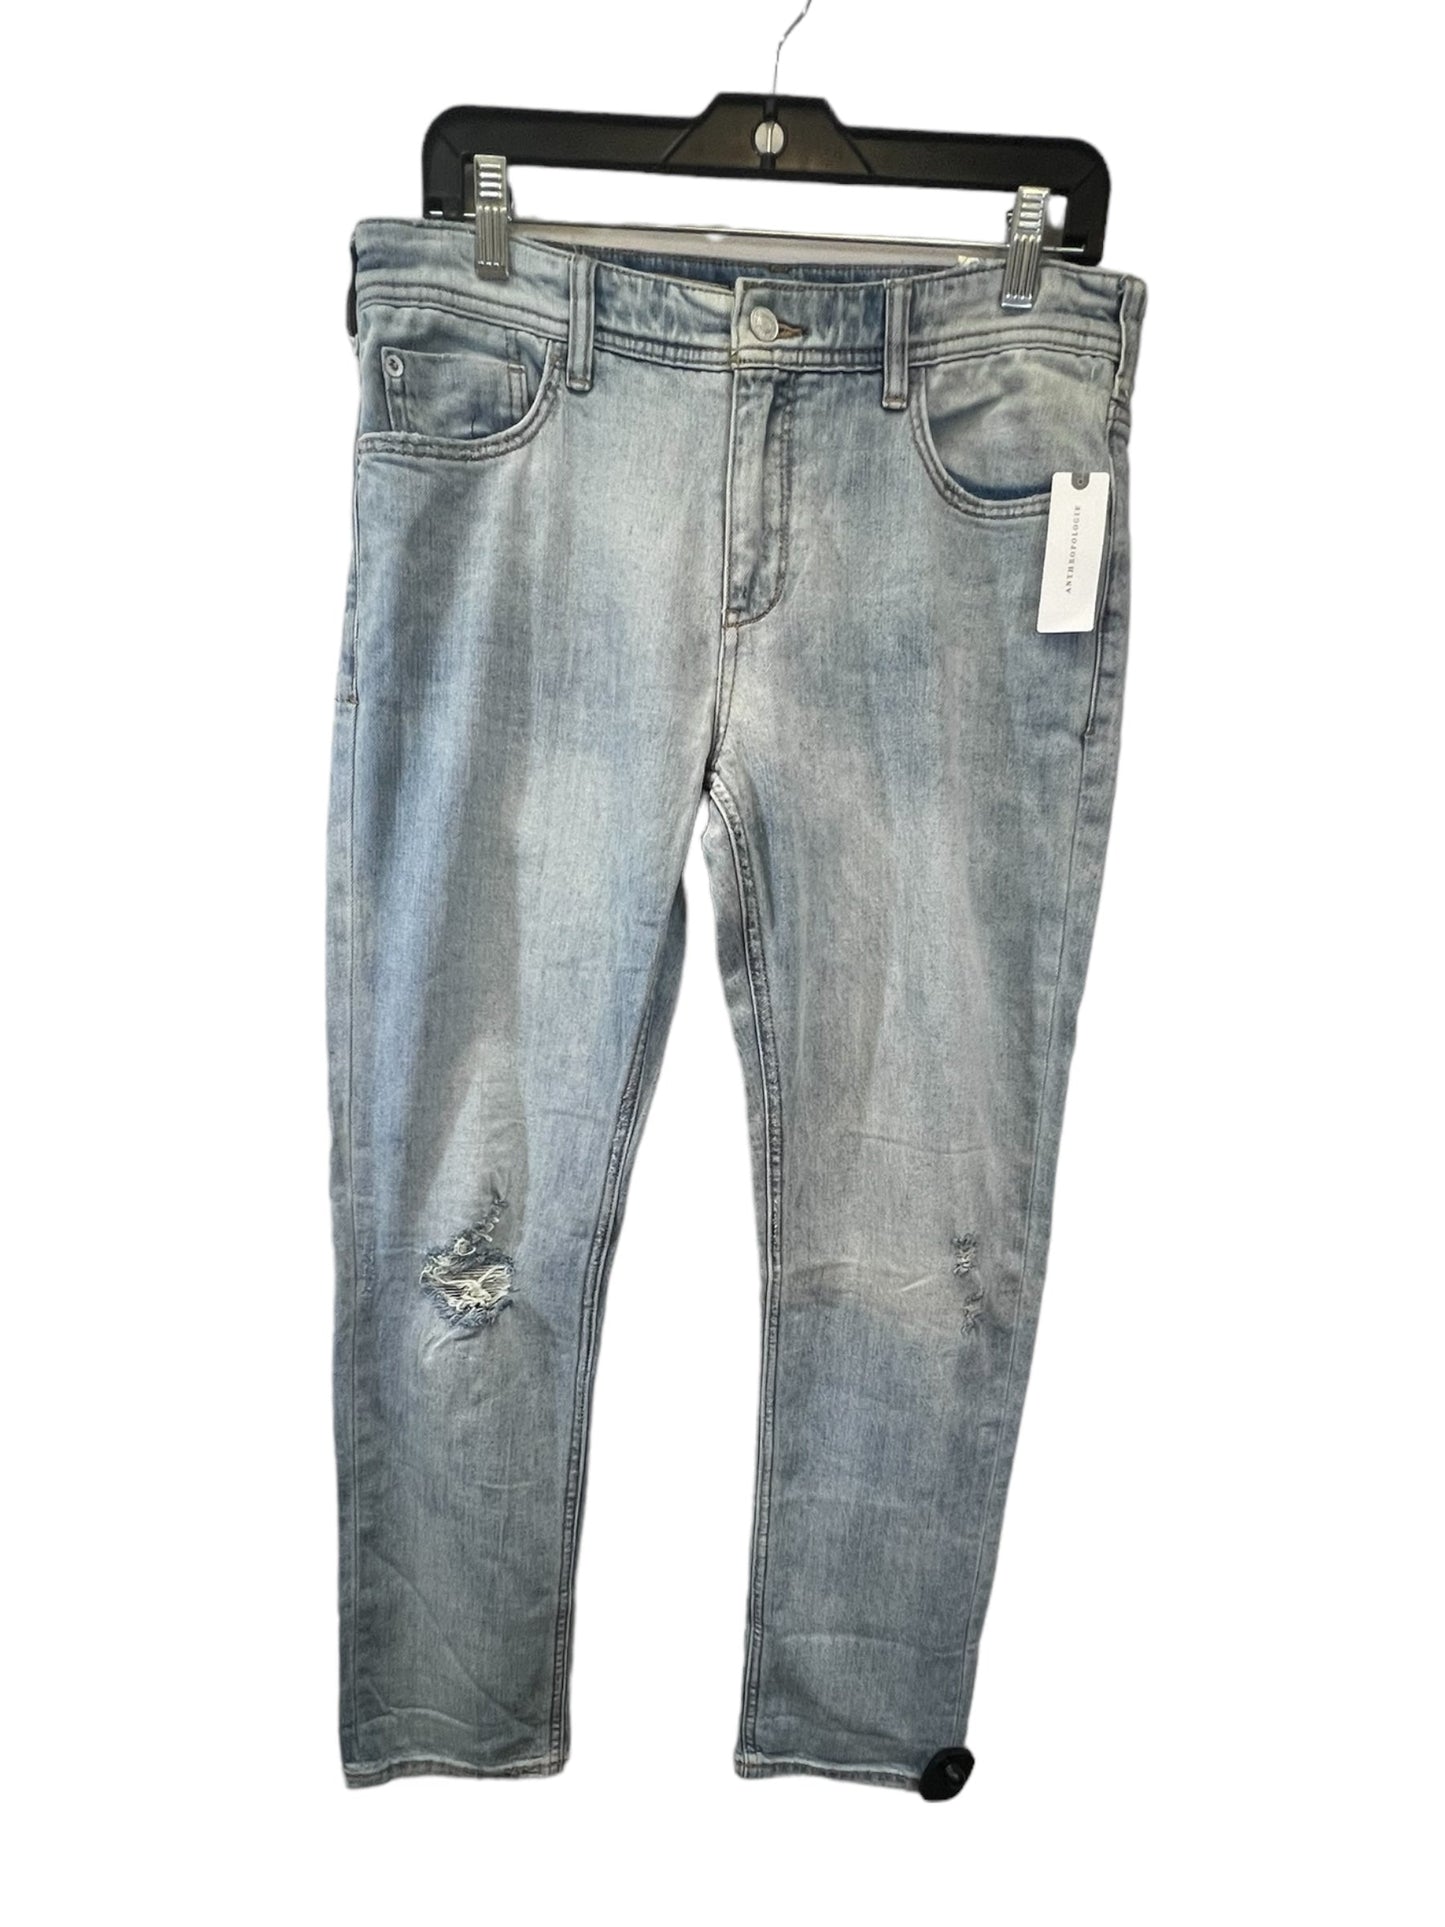 Blue Denim Jeans Designer Pilcro, Size 6